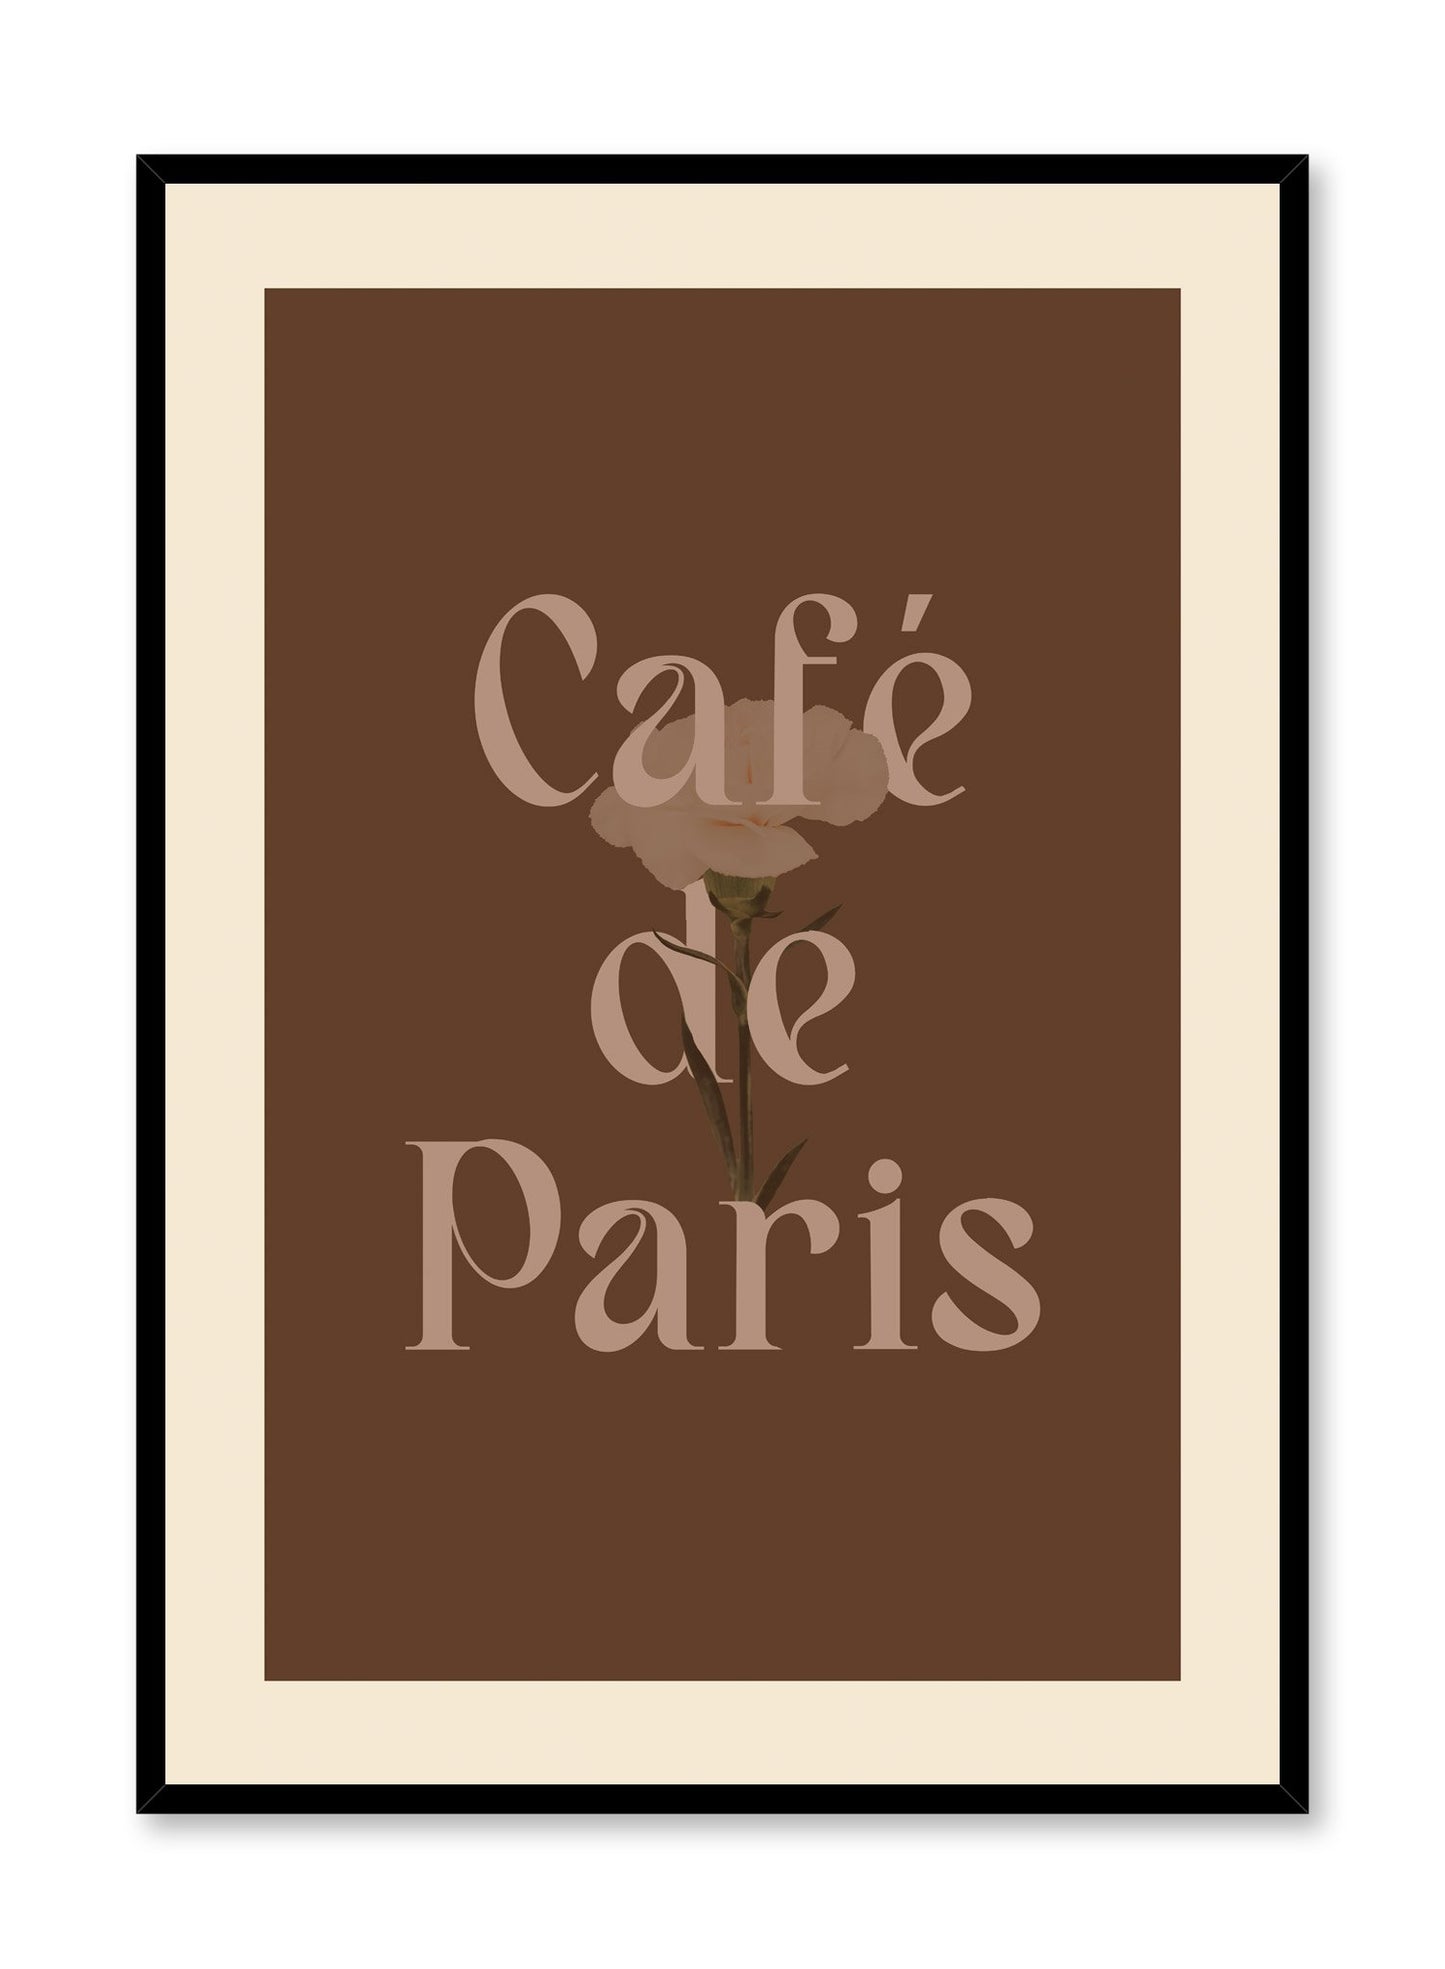 "Café de Paris" is a minimalist beige and brown typography poster by Opposite Wall of the words ‘café de Paris’ over a beige background. 